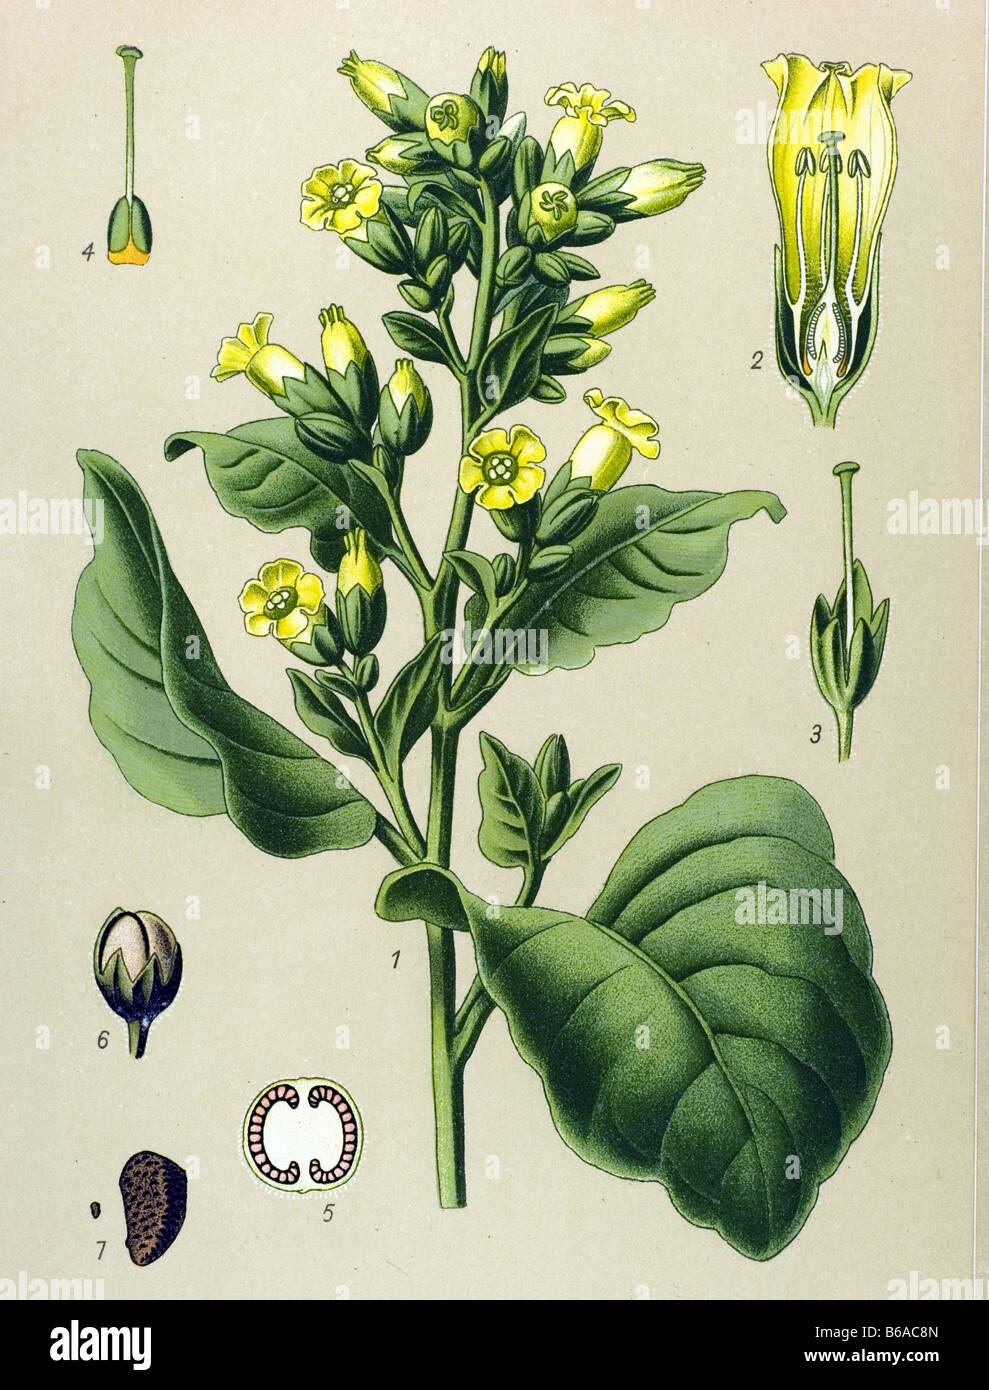 Mapacho, Nicotiana rustica poisonous plants illustrations Stock Photo